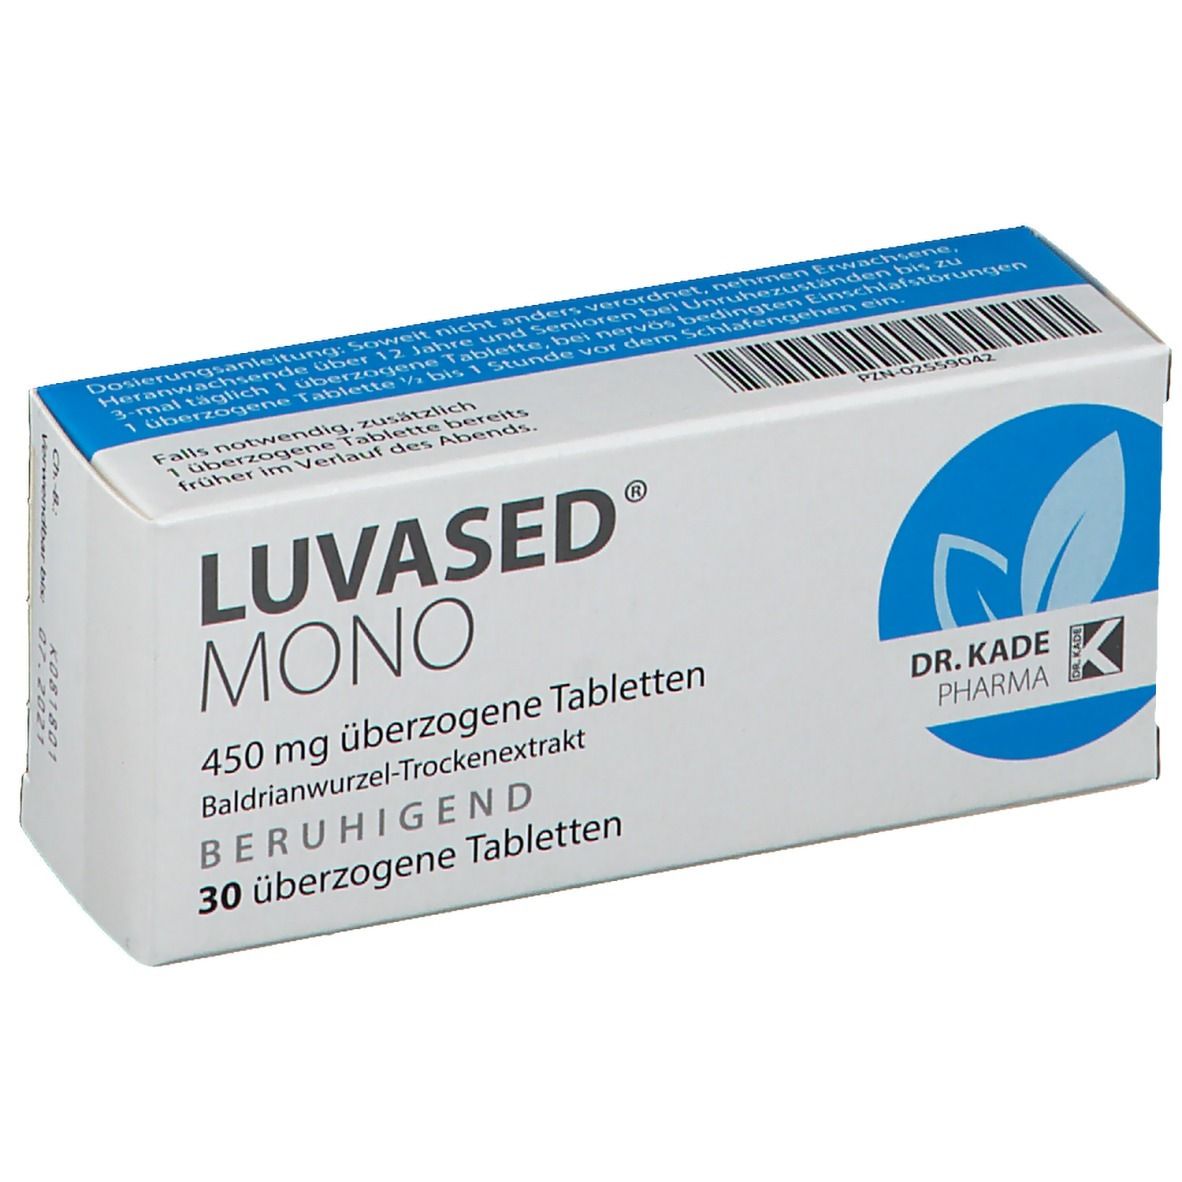 Luvased® mono 450 mg